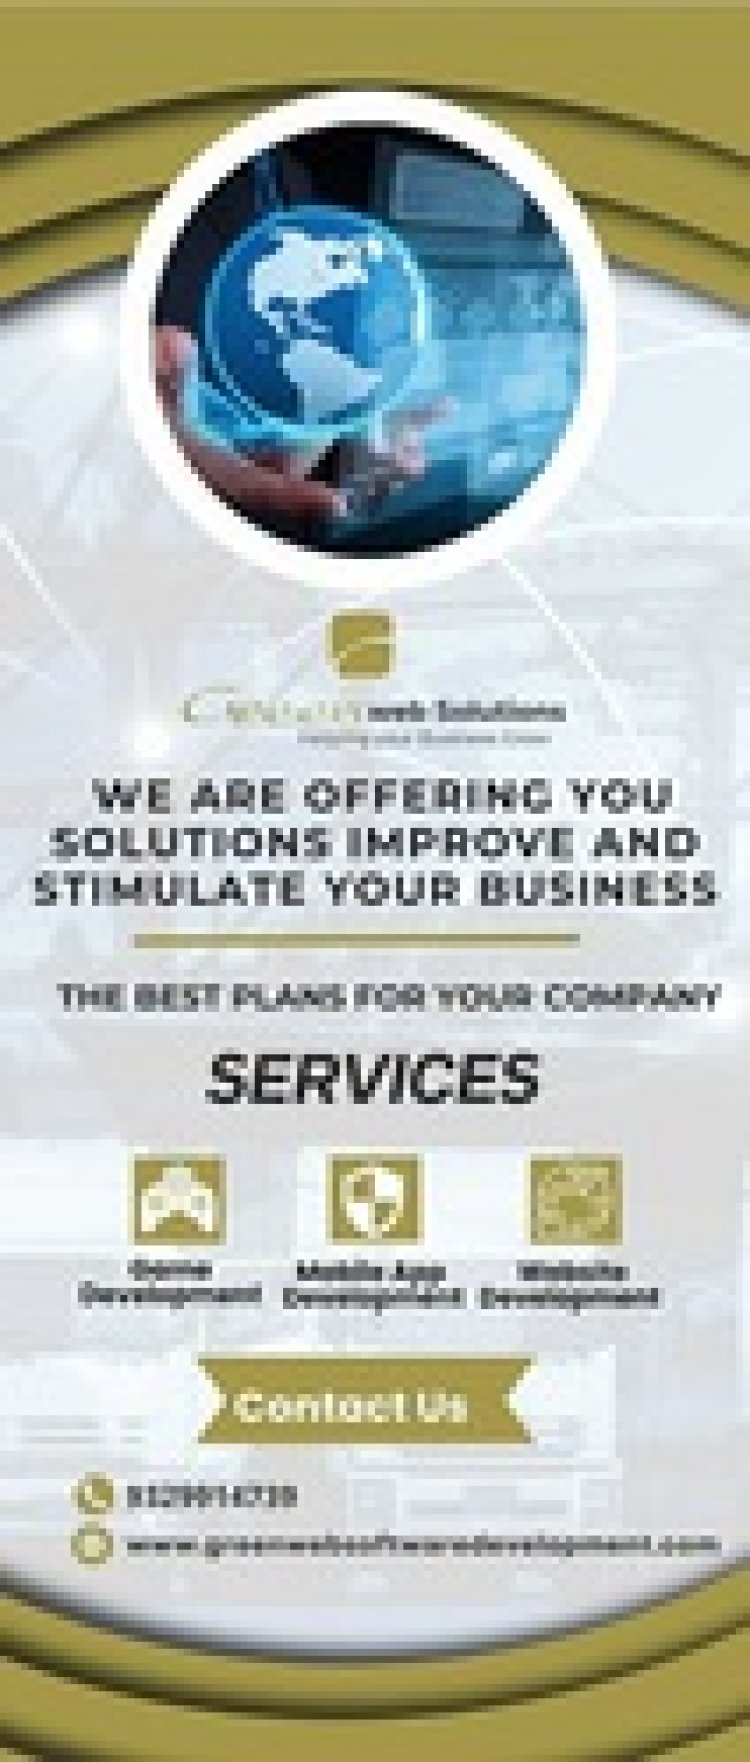 GWS Tele Services | Internet Service in Singrauli MP